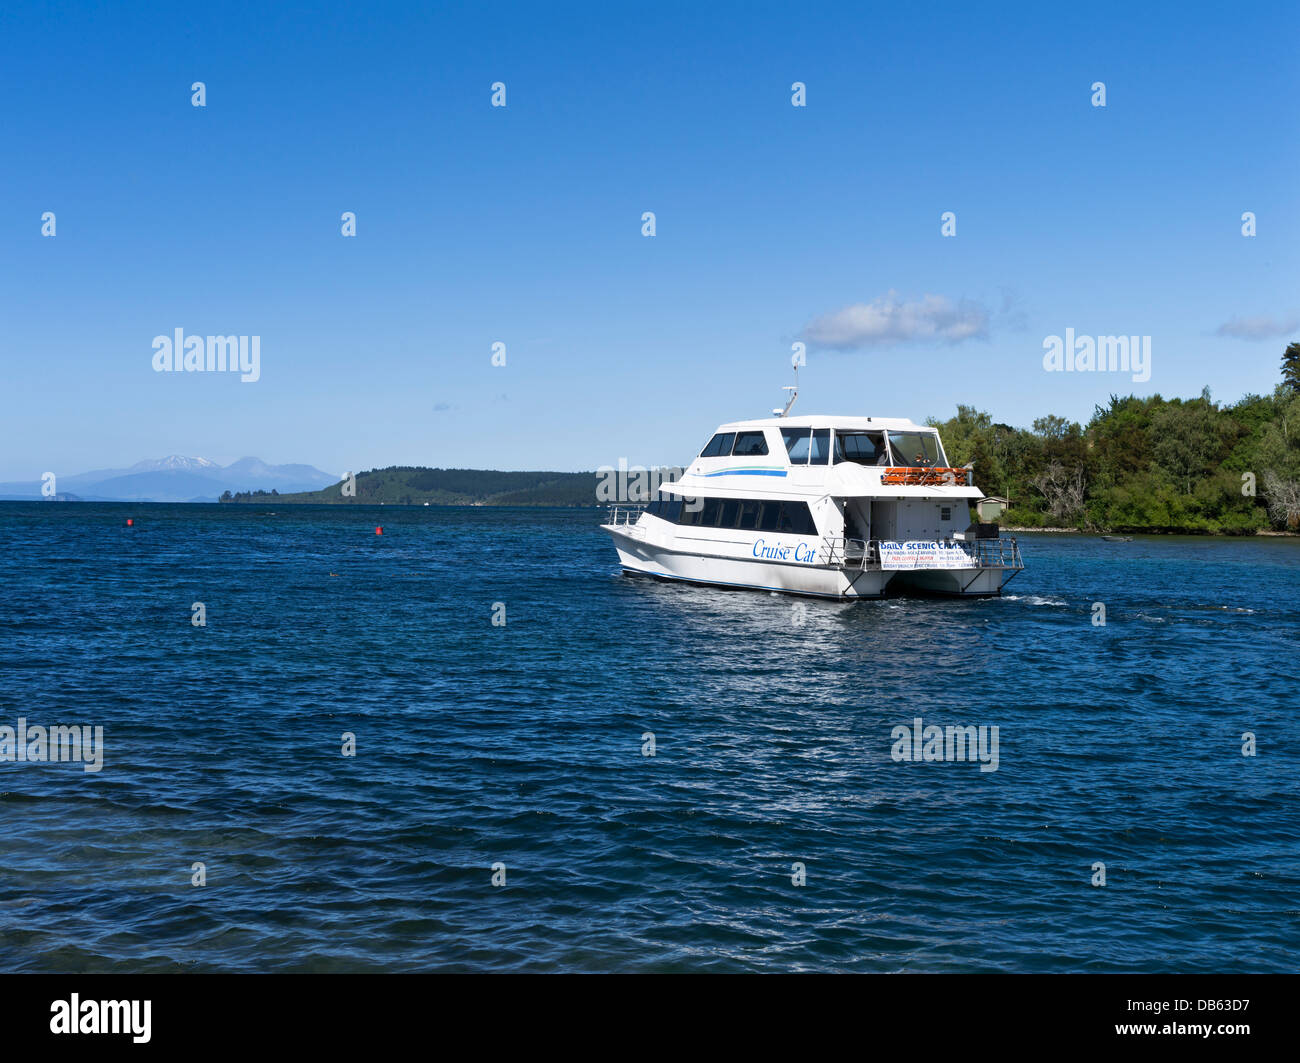 dh Lake Taupo TAUPO NEW ZEALAND Cruise Cat catamaran tourist trips Lake Taupo cruising trip Stock Photo